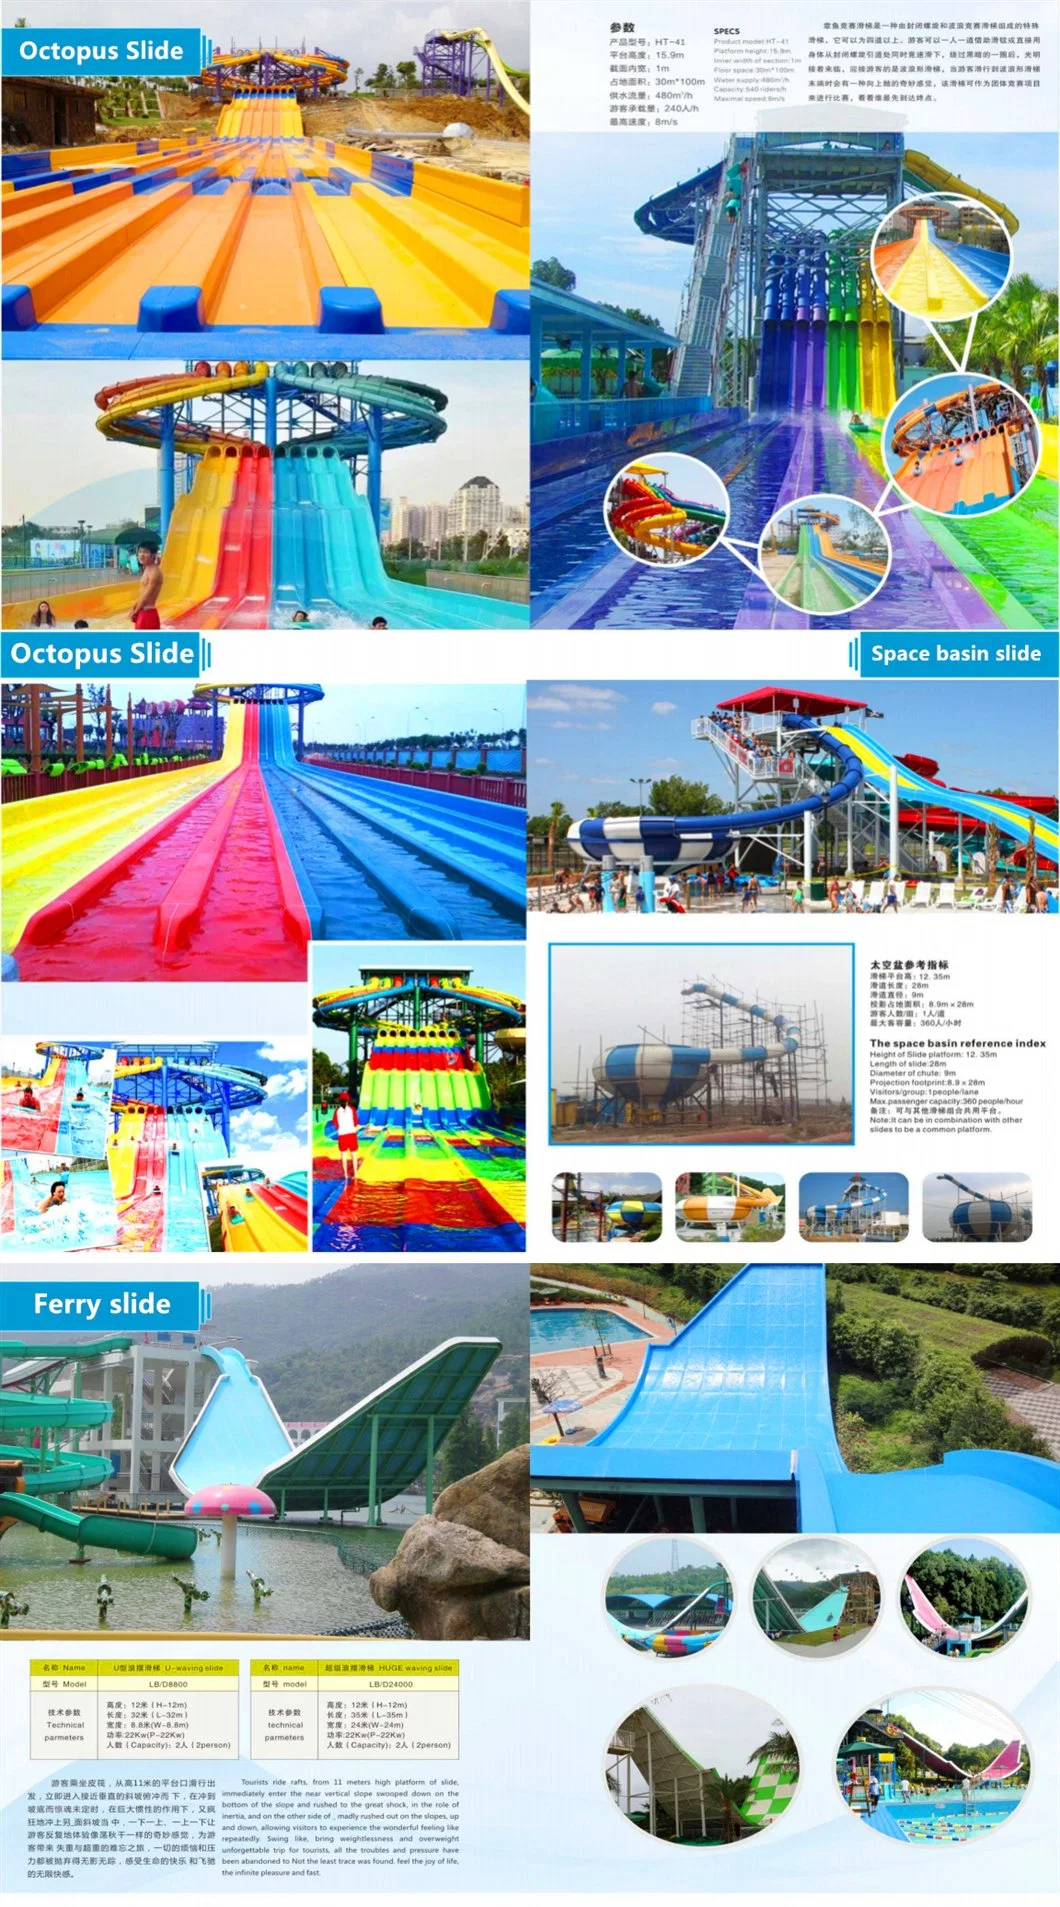 Customized Adult Water Park Equipment, Children&prime;s High-Altitude Fiberglass Curved Slide